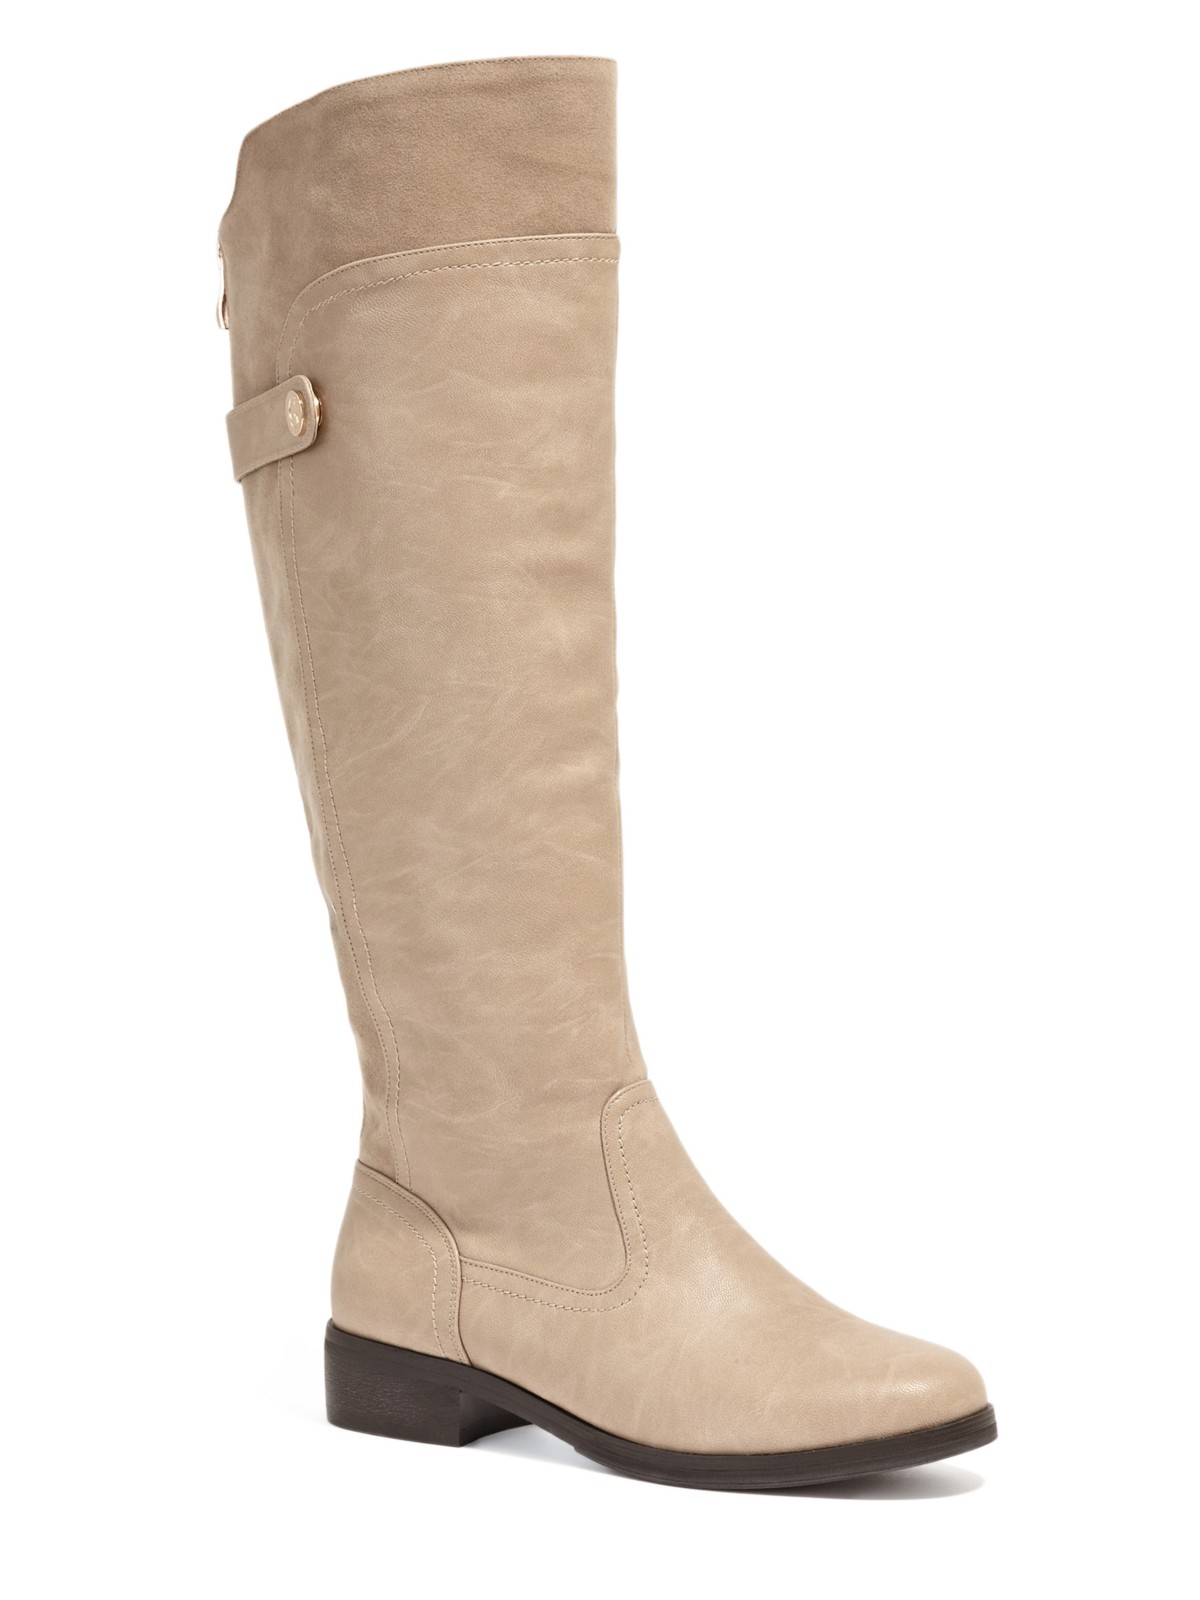 GUESS Nina Tall Flat Boots | eBay